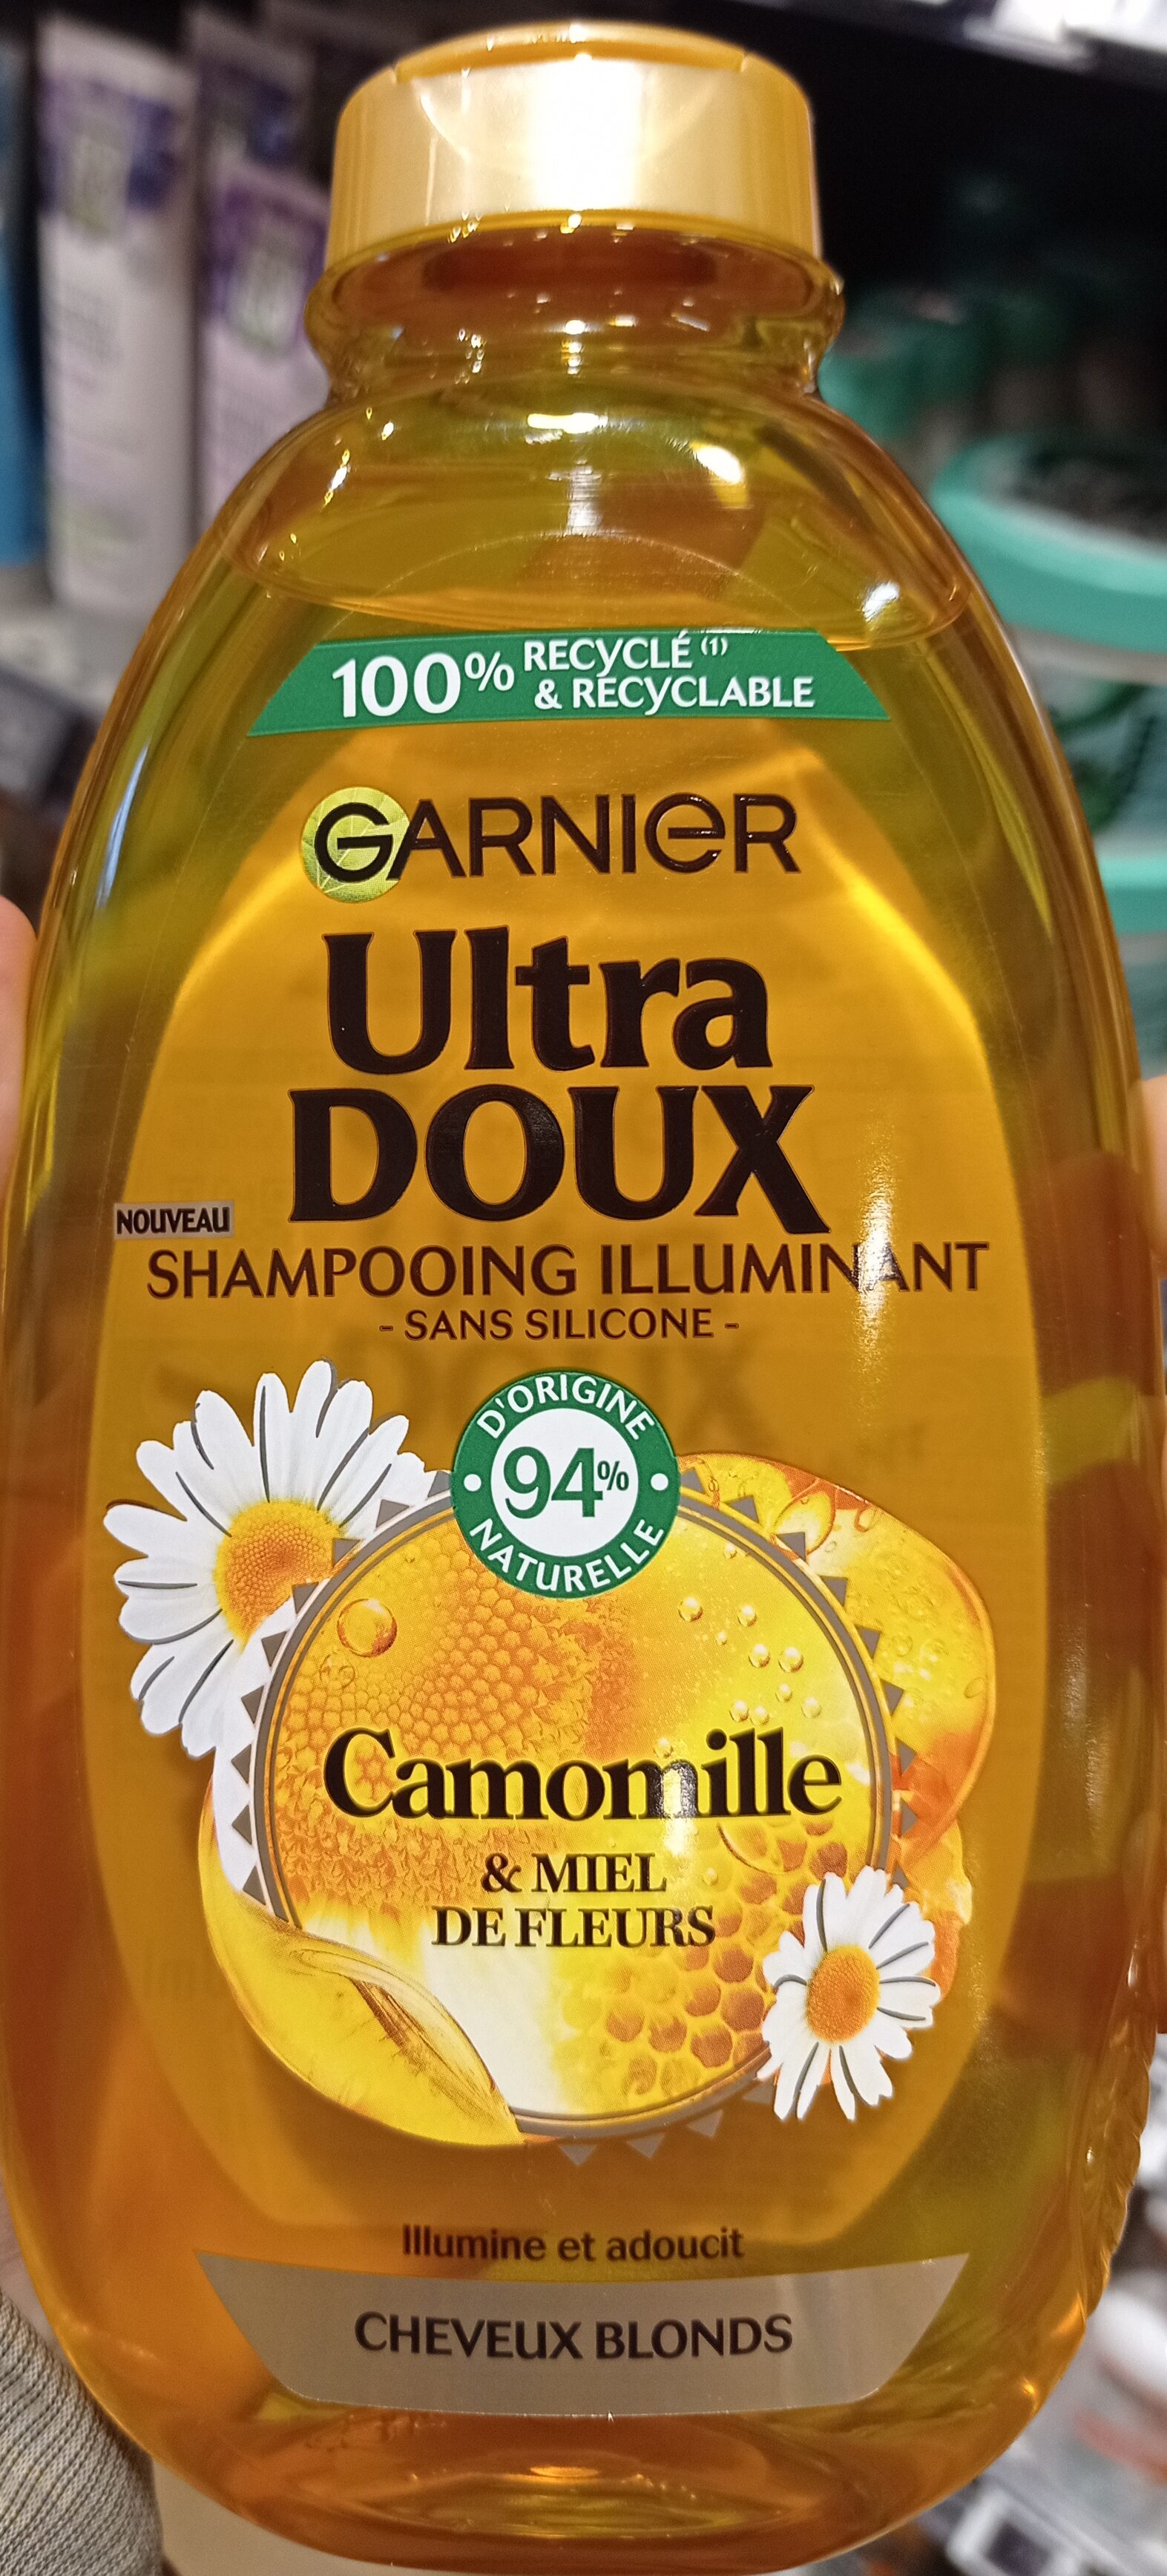 shampoing illuminant, camomille et miel de fleurs - Produto - fr